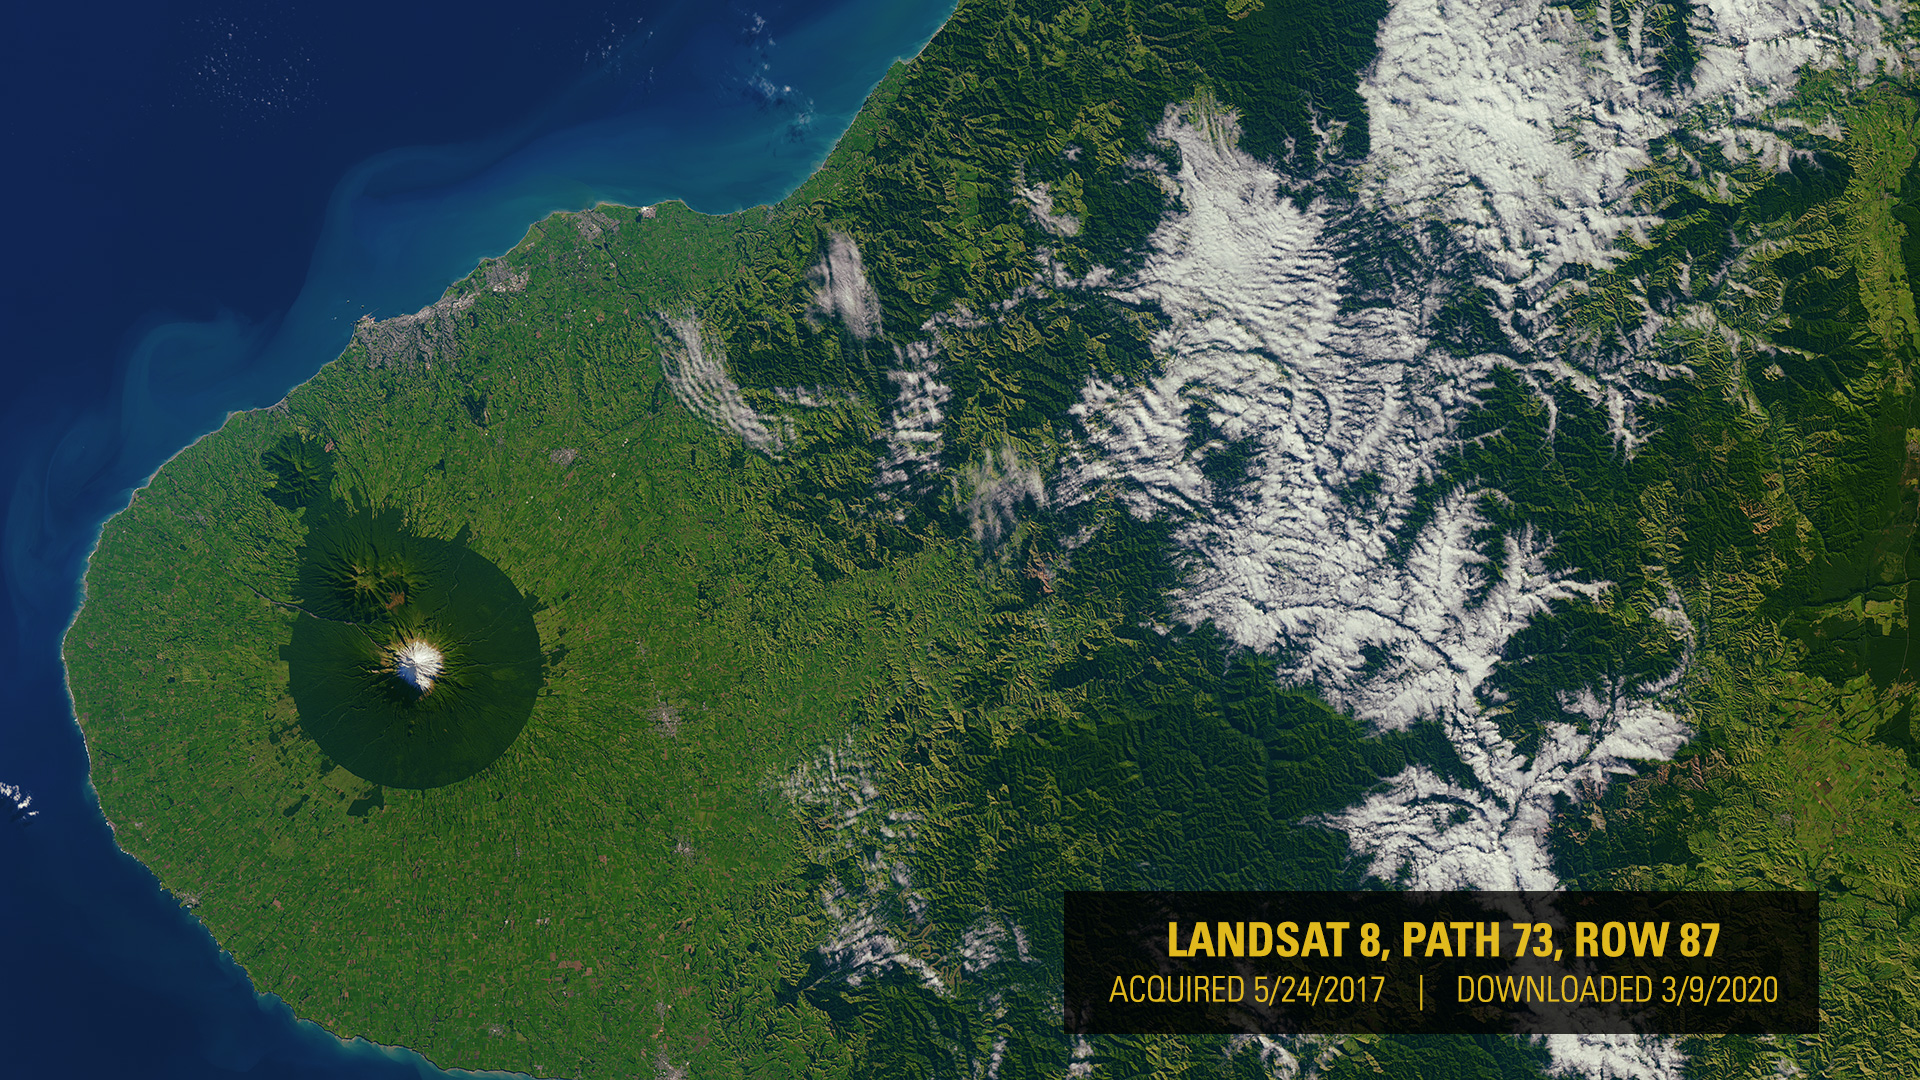 100 Million Landsat Downloads - right